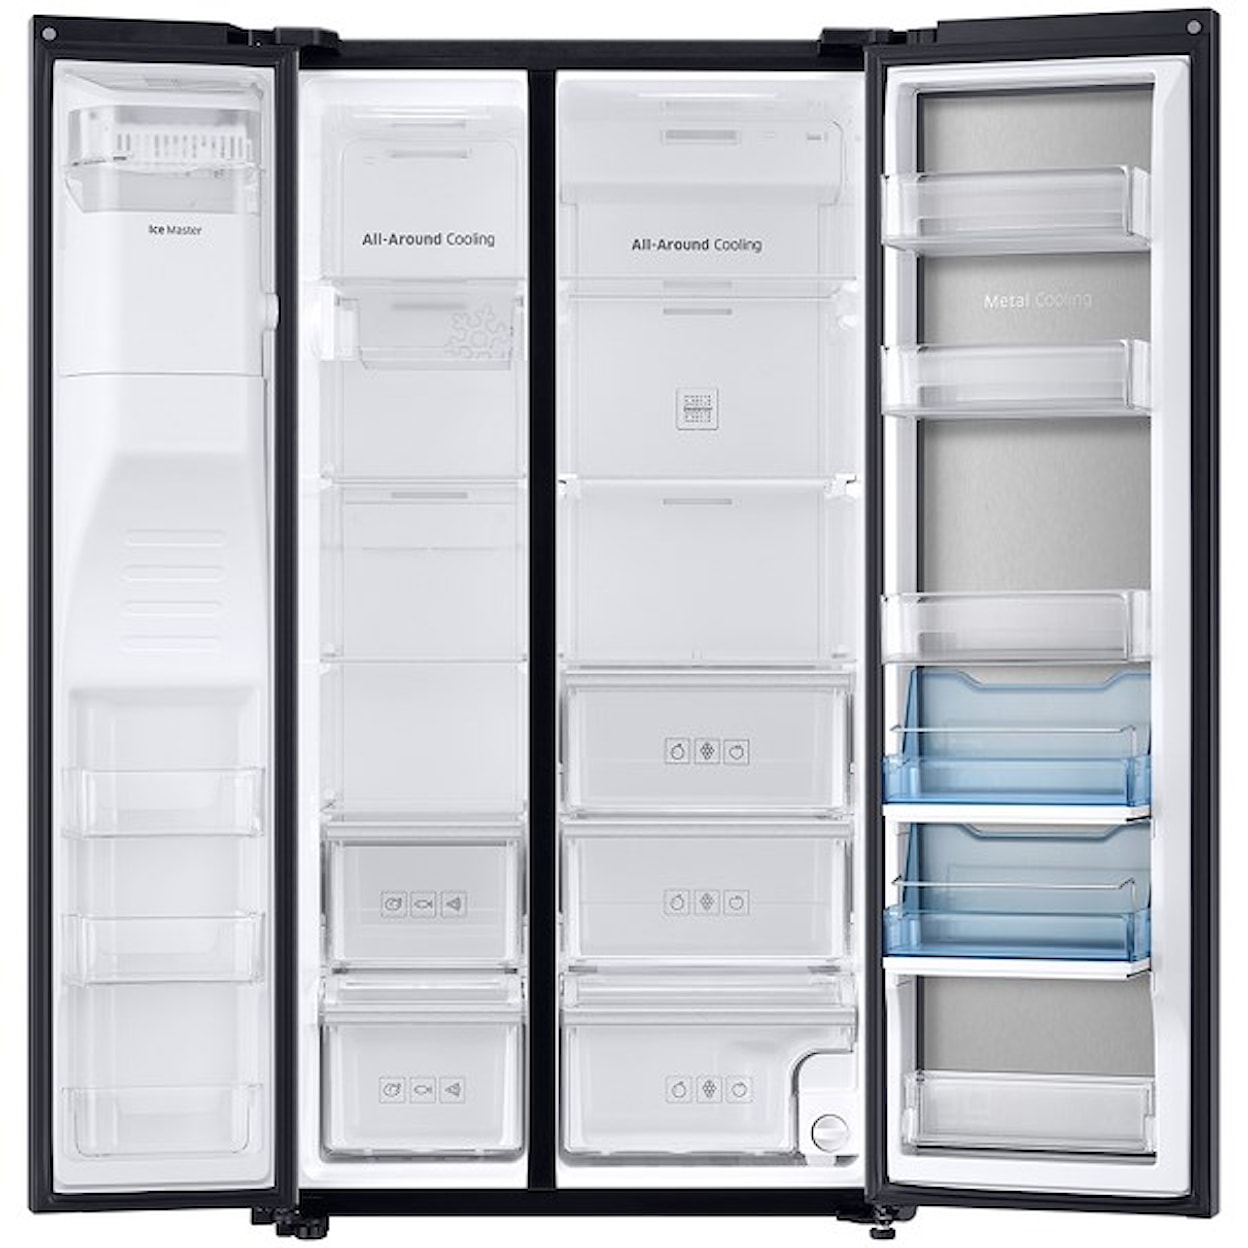 Samsung Appliances Side-By-Side Refrigerators- Samsung 22cu.ft. Counter Depth Side-by-Side Fridge